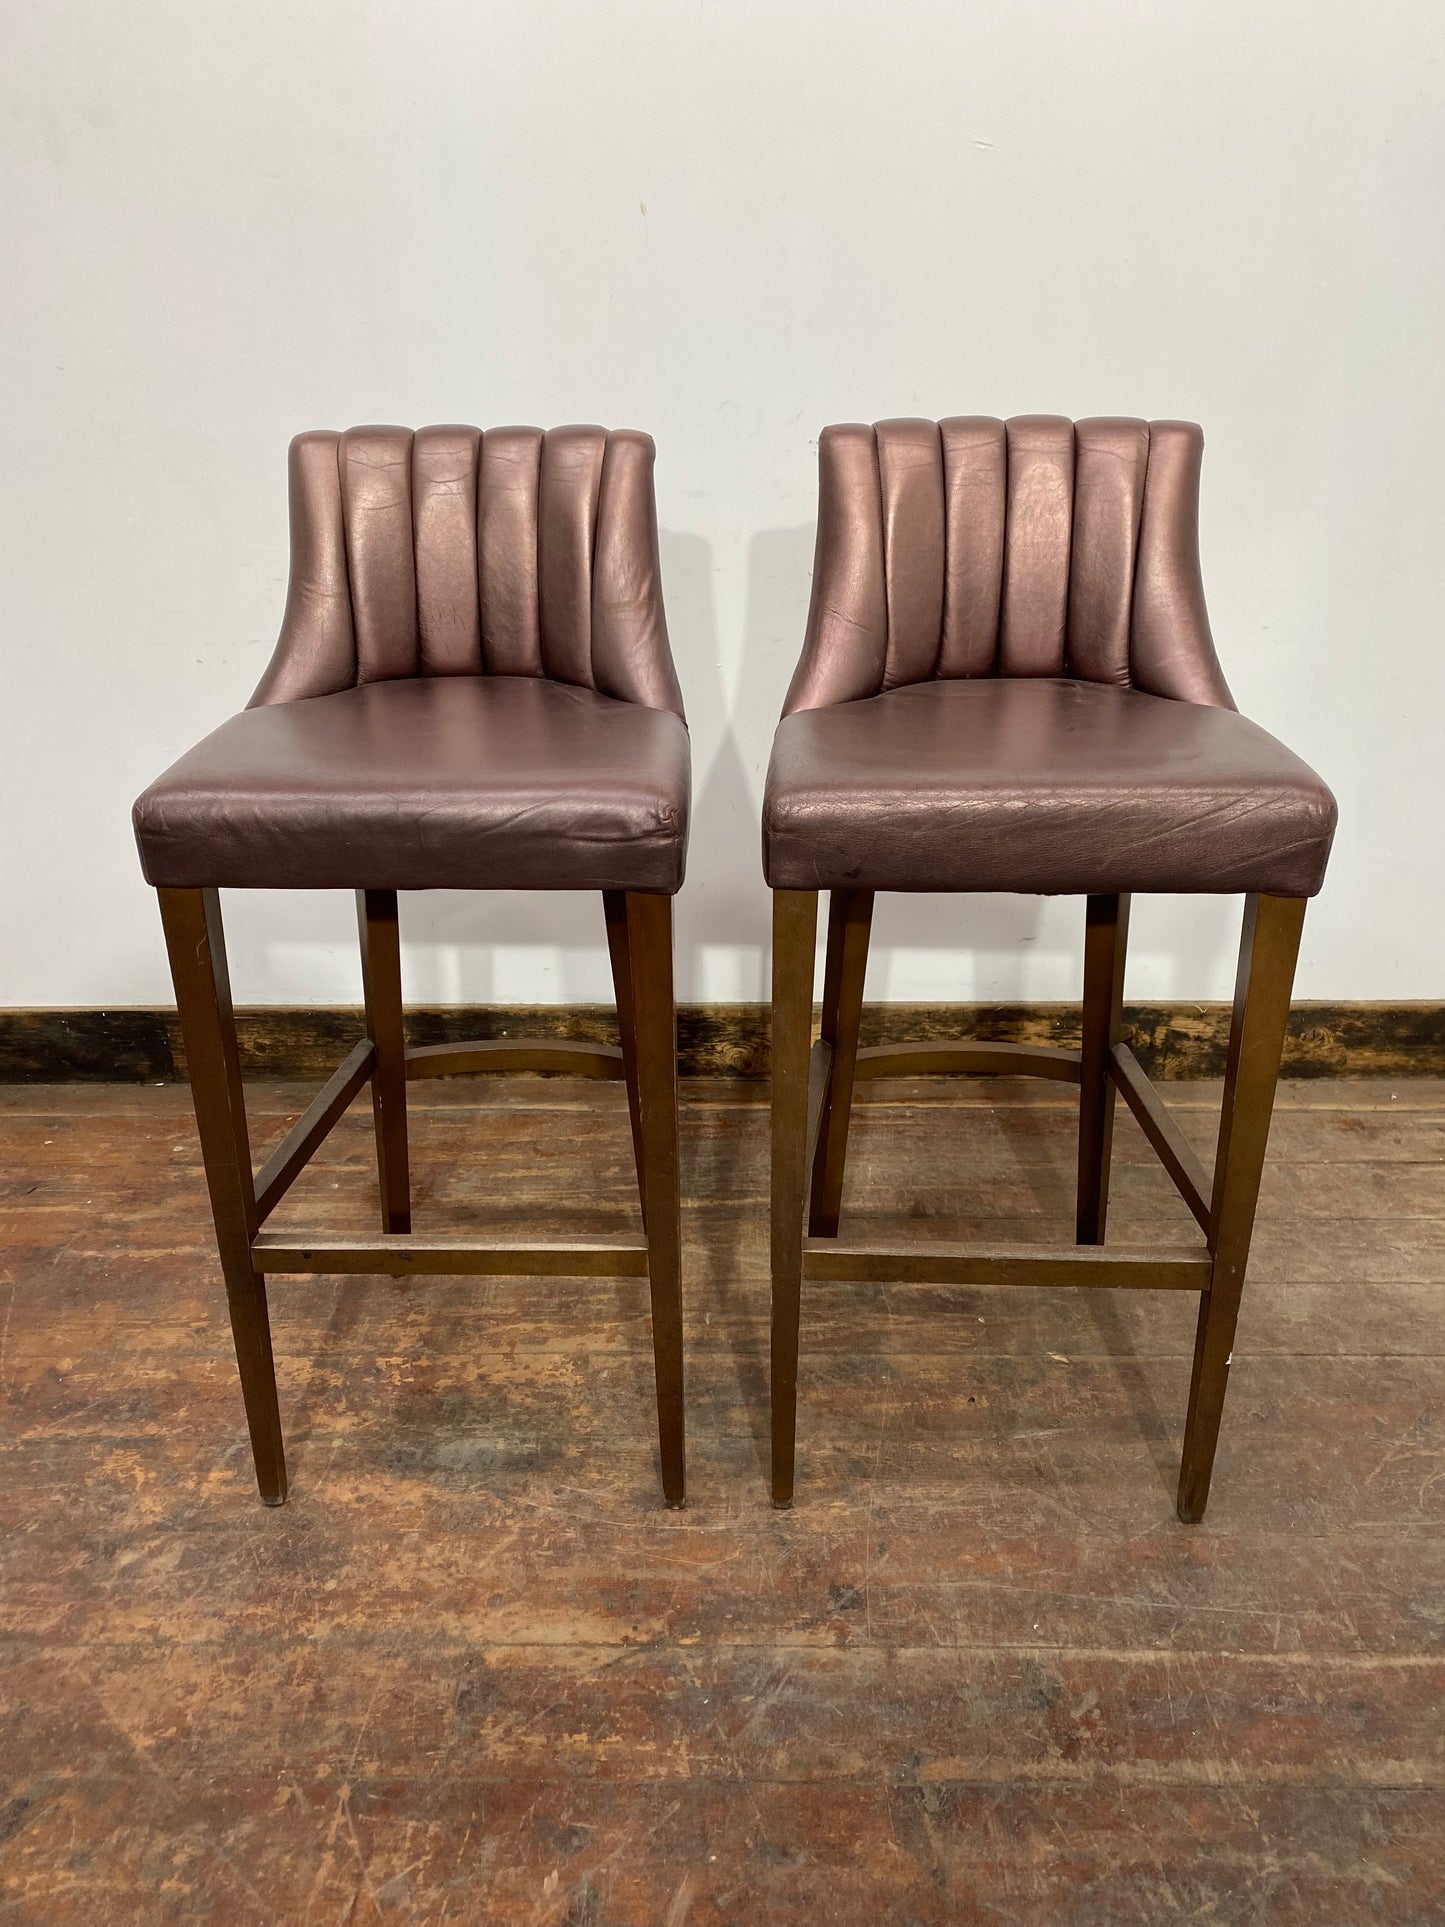 Pair of metallic bronze bar stools